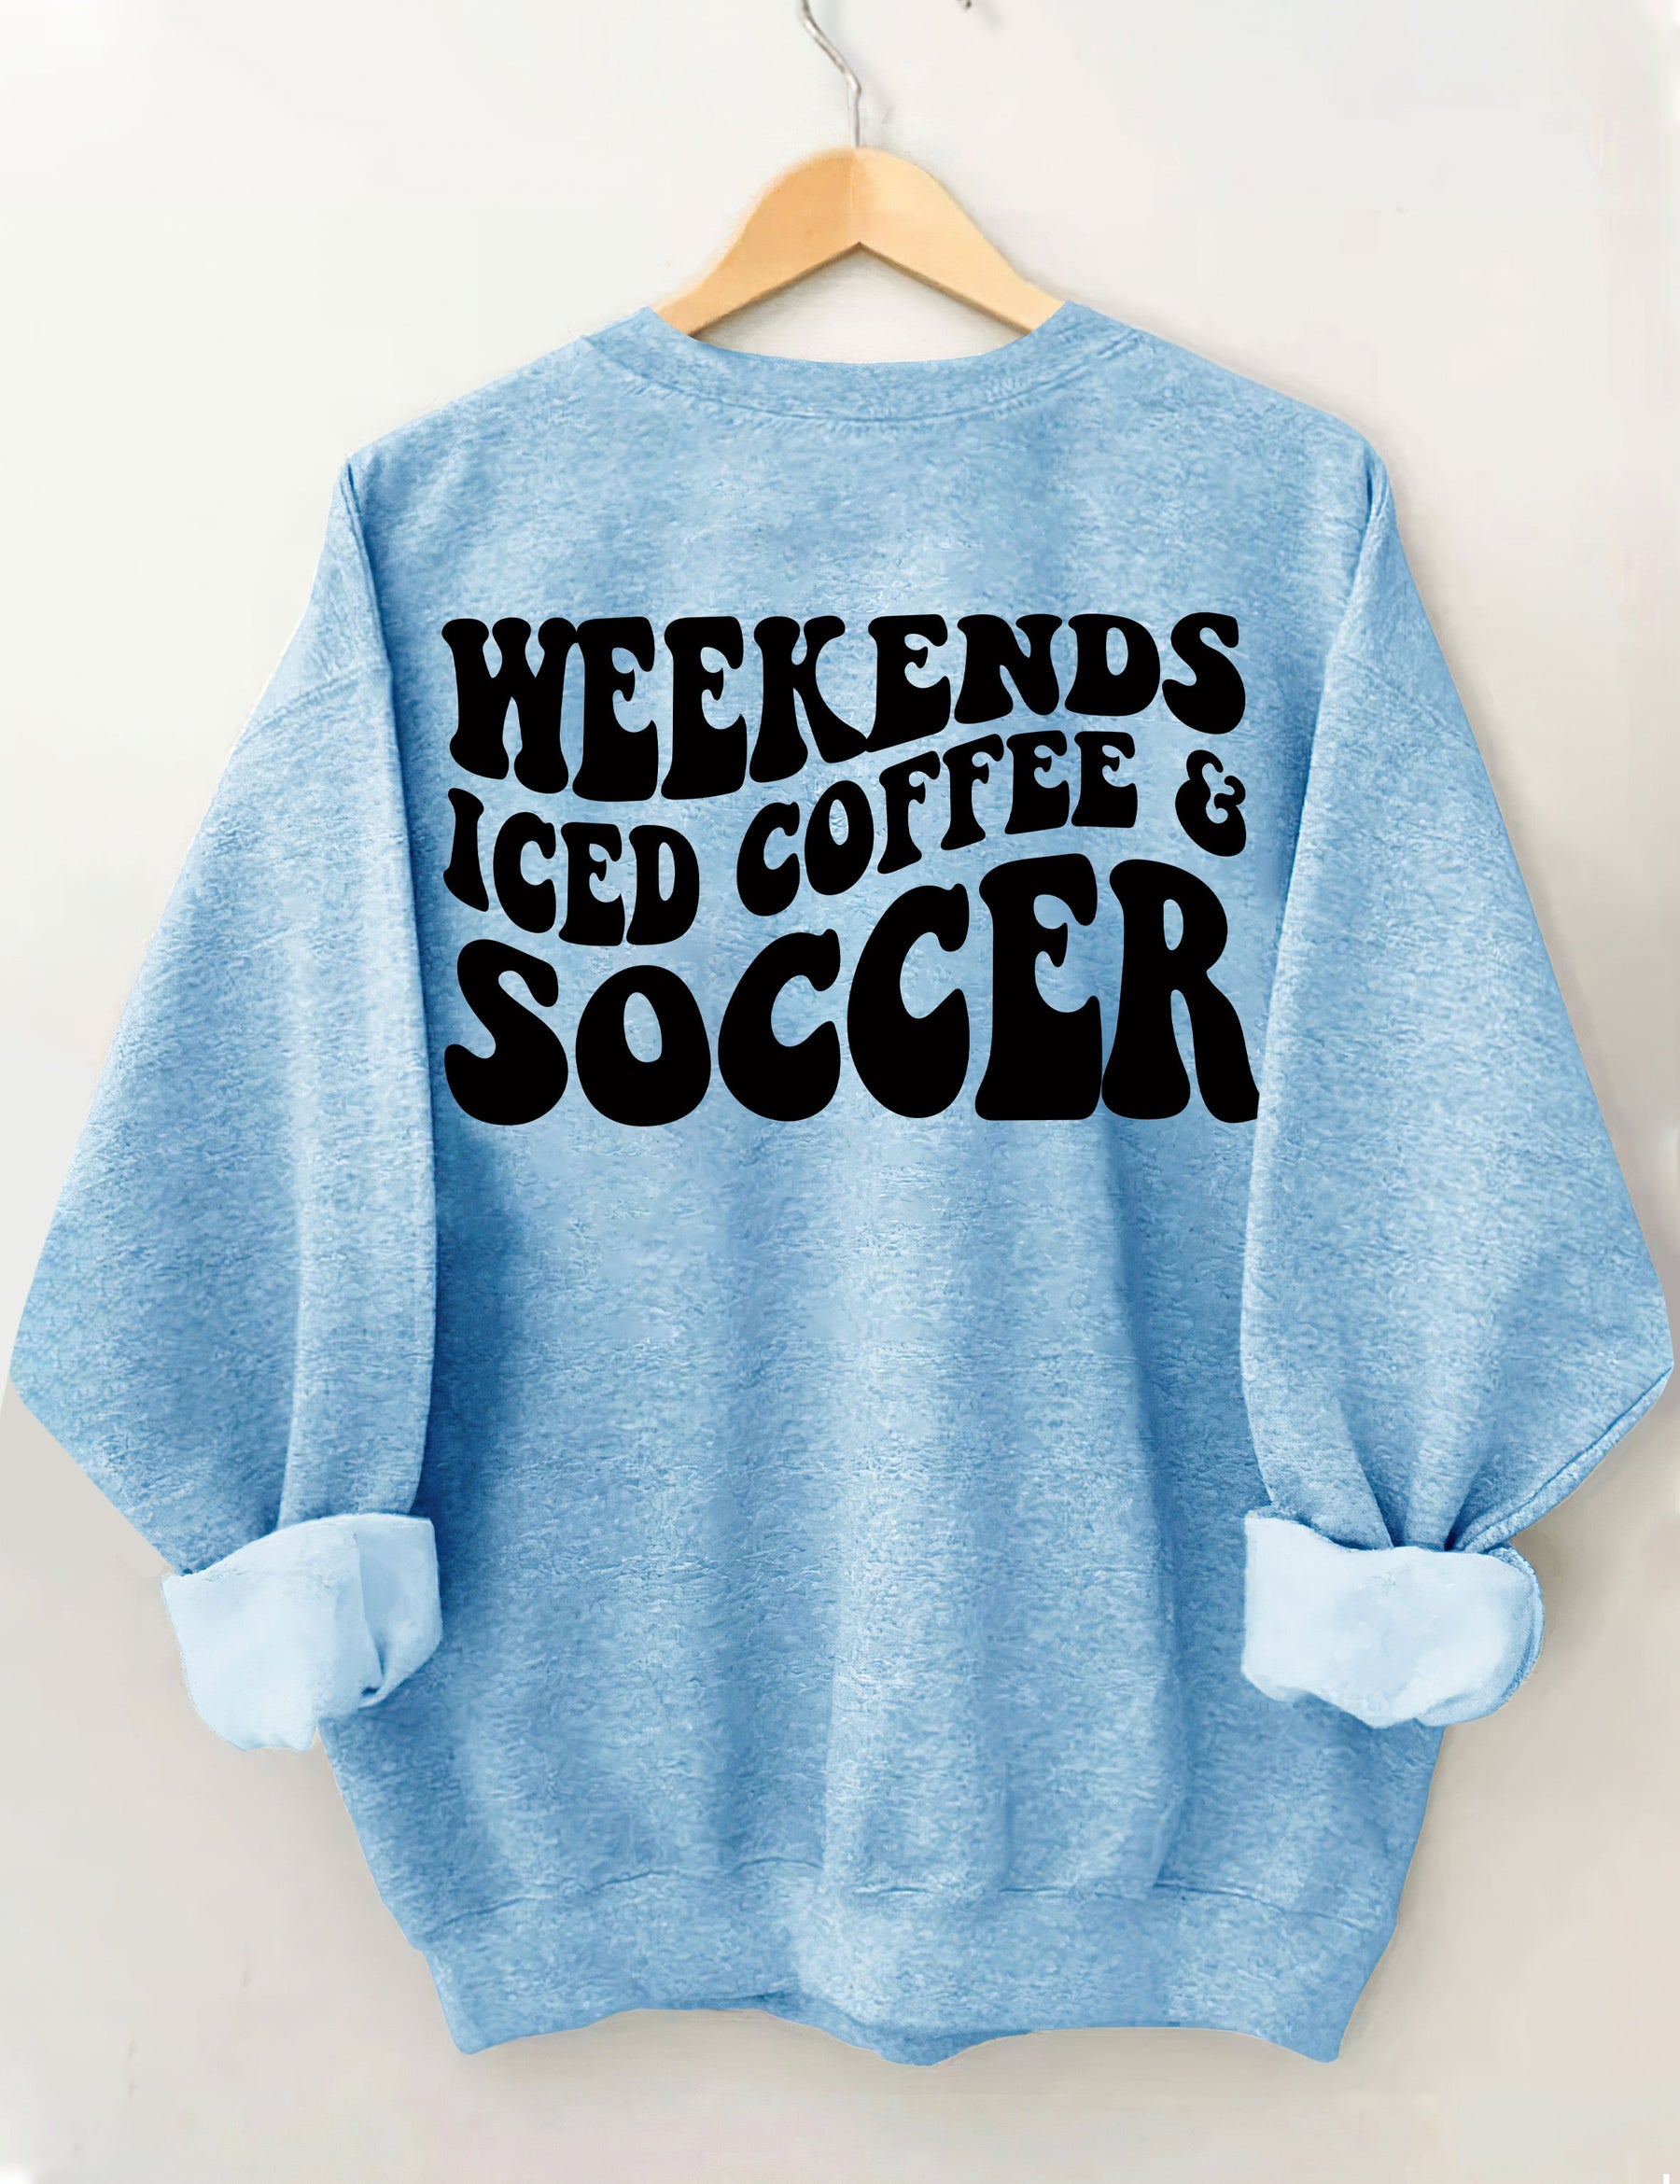 Weekends Iced Coffee Soccer Sweatshirt